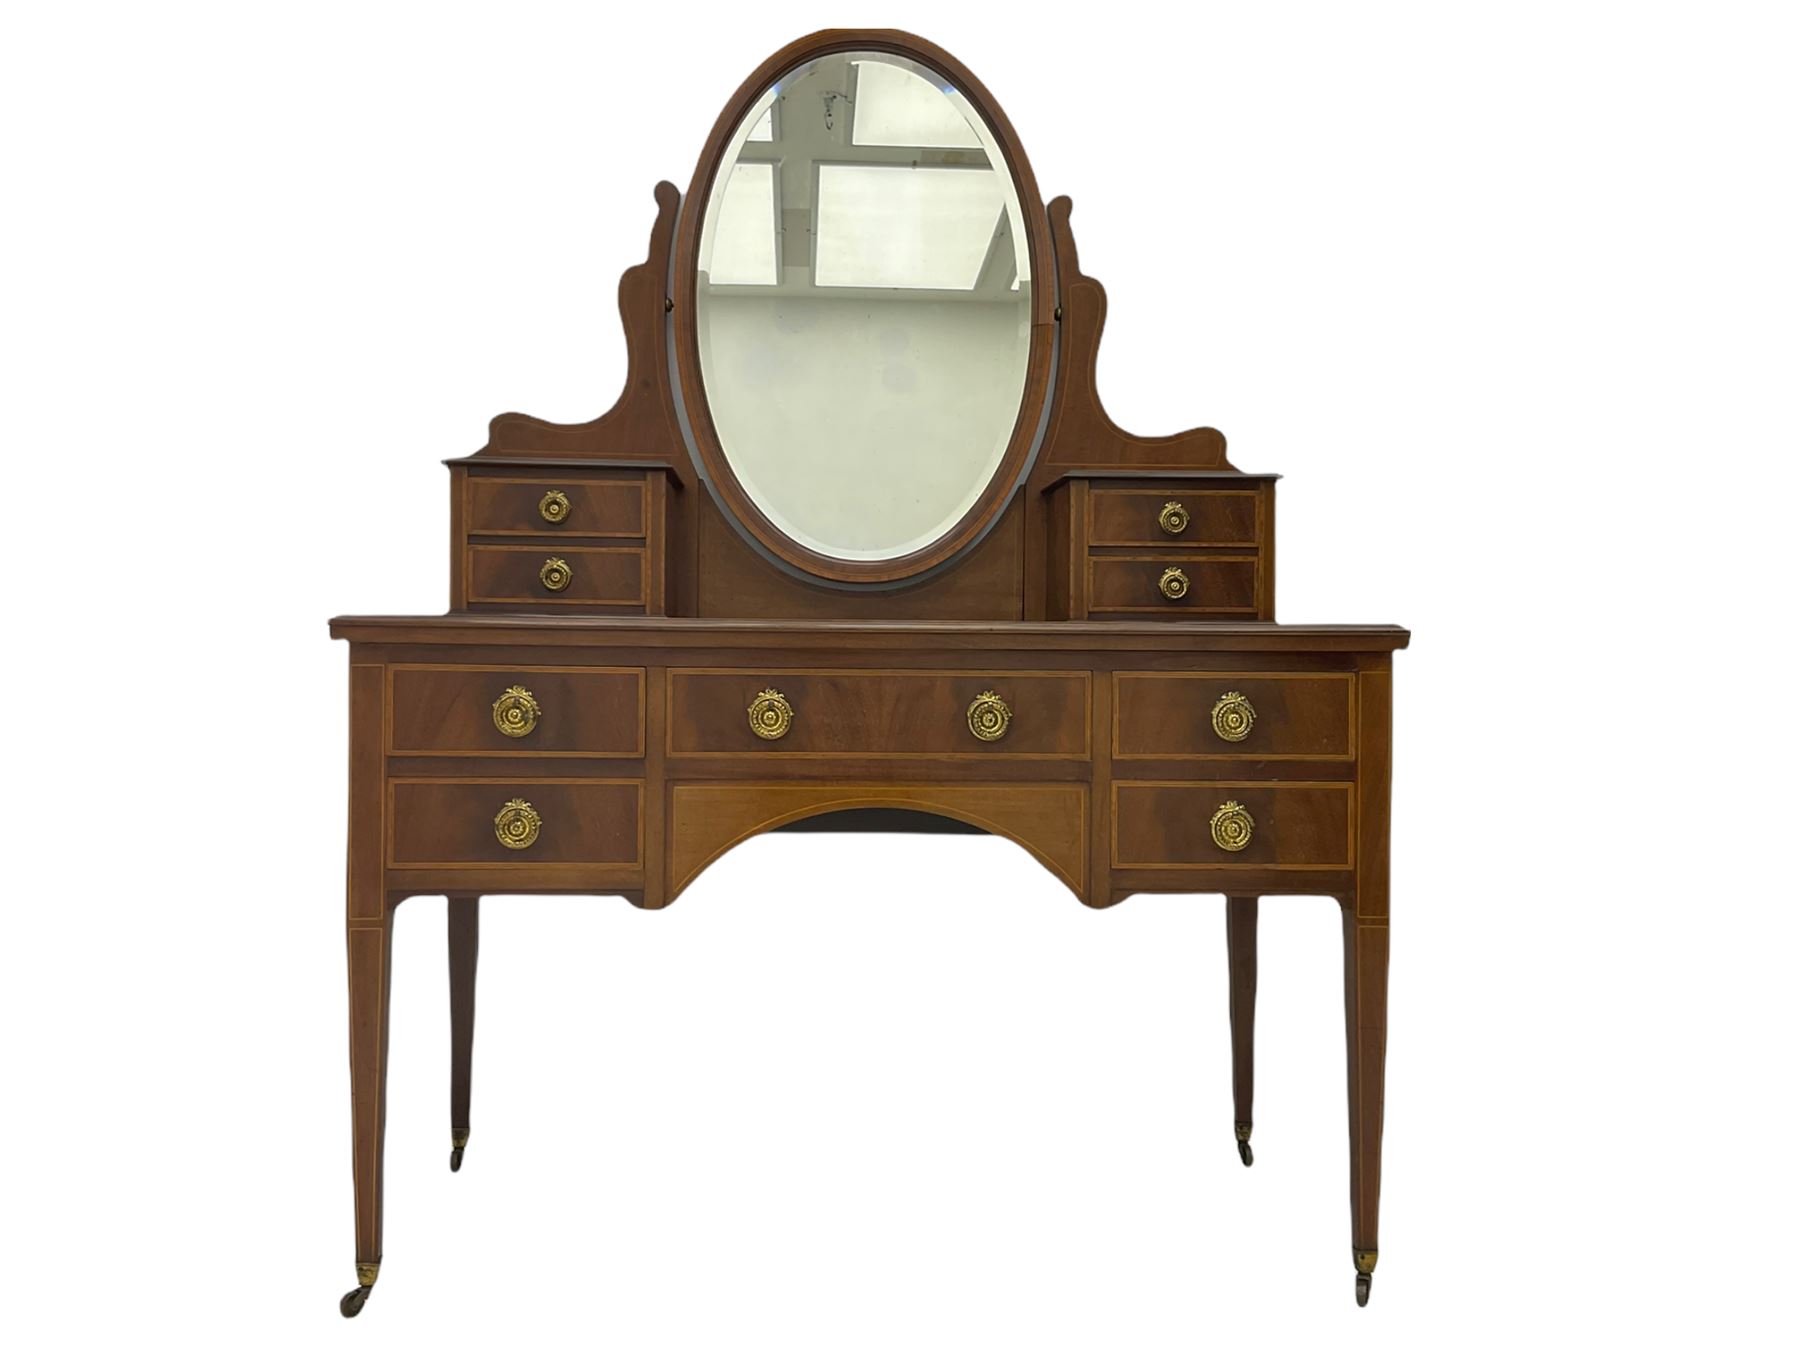 James Shoolbred & Co. London - Edwardian inlaid mahogany dressing table